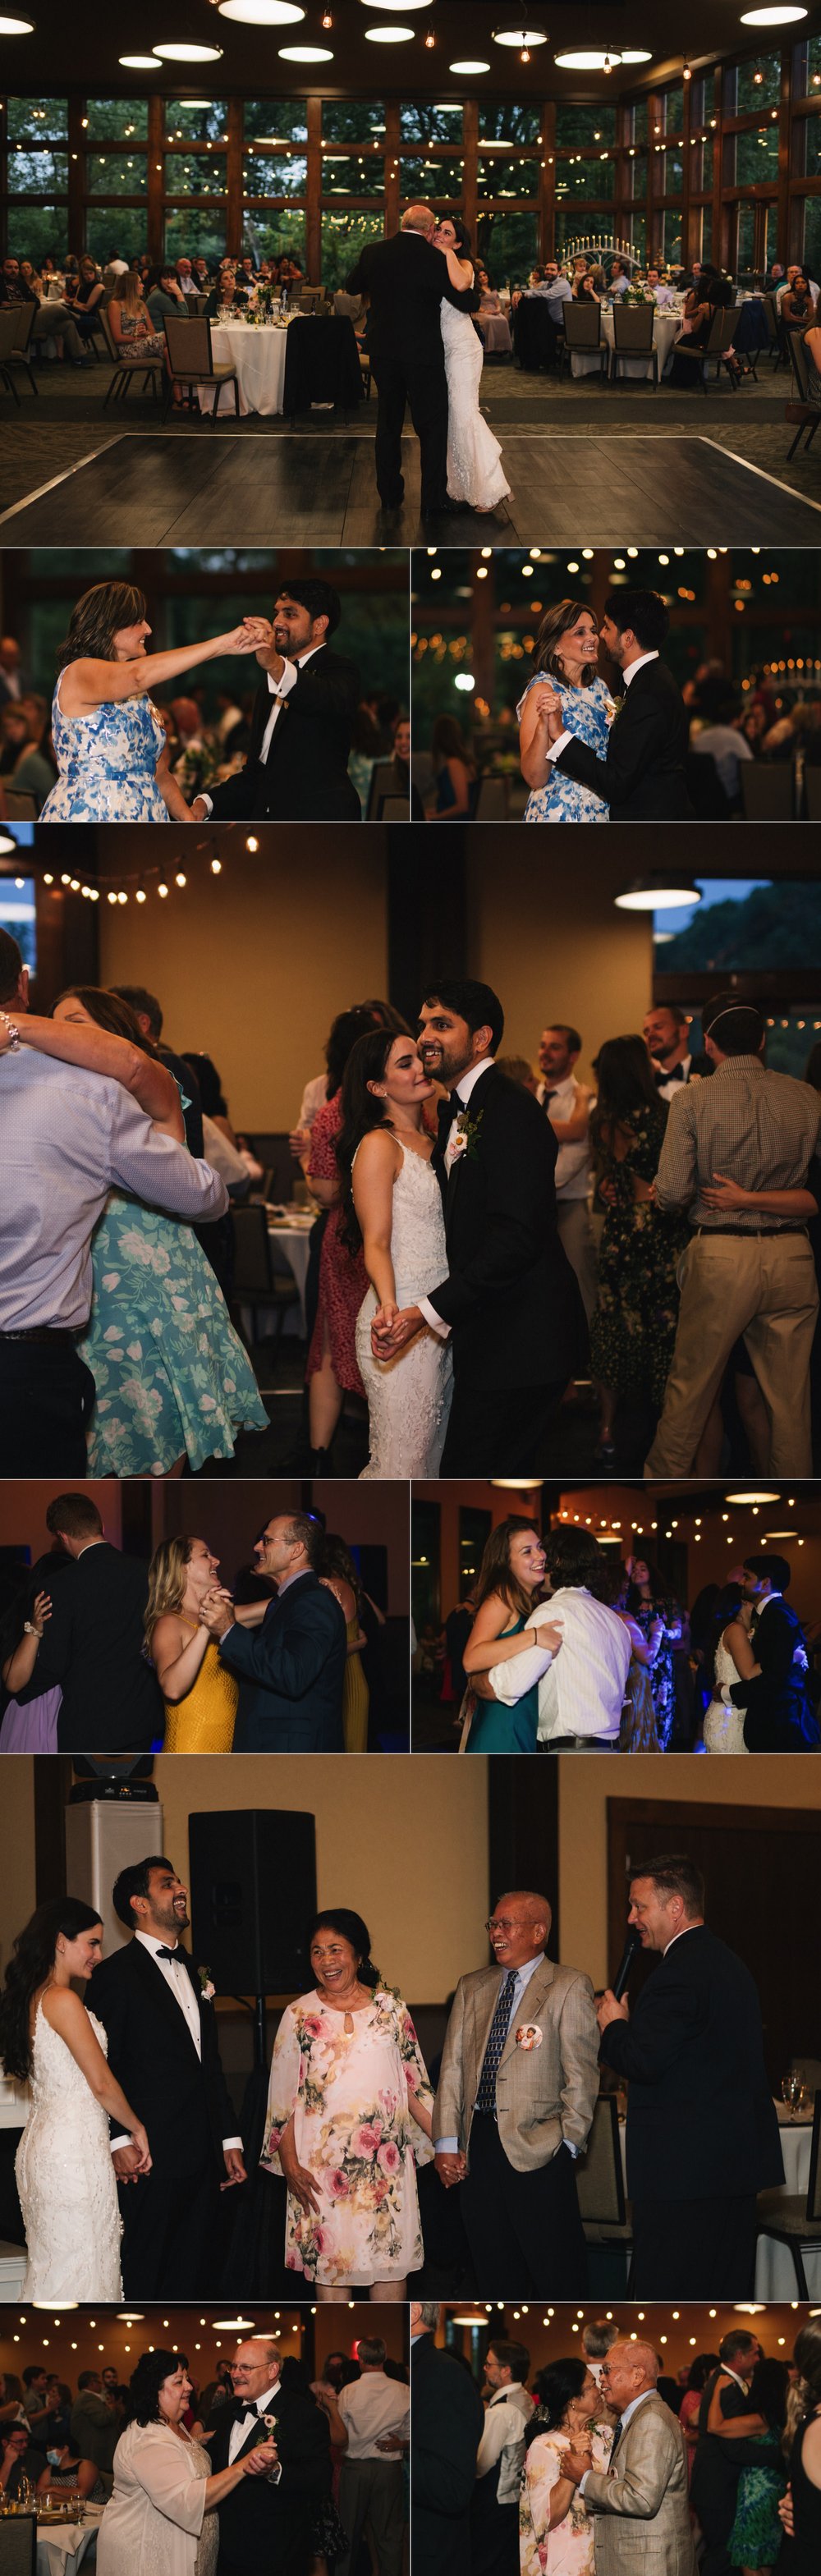 Gheens-Foundation-Lodge-Romantic-Garden-Wedding-By-Louisville-Kentucky-Wedding-Photographer-Sarah-Katherine-Davis-Photography-florals-reception-dancing.jpg